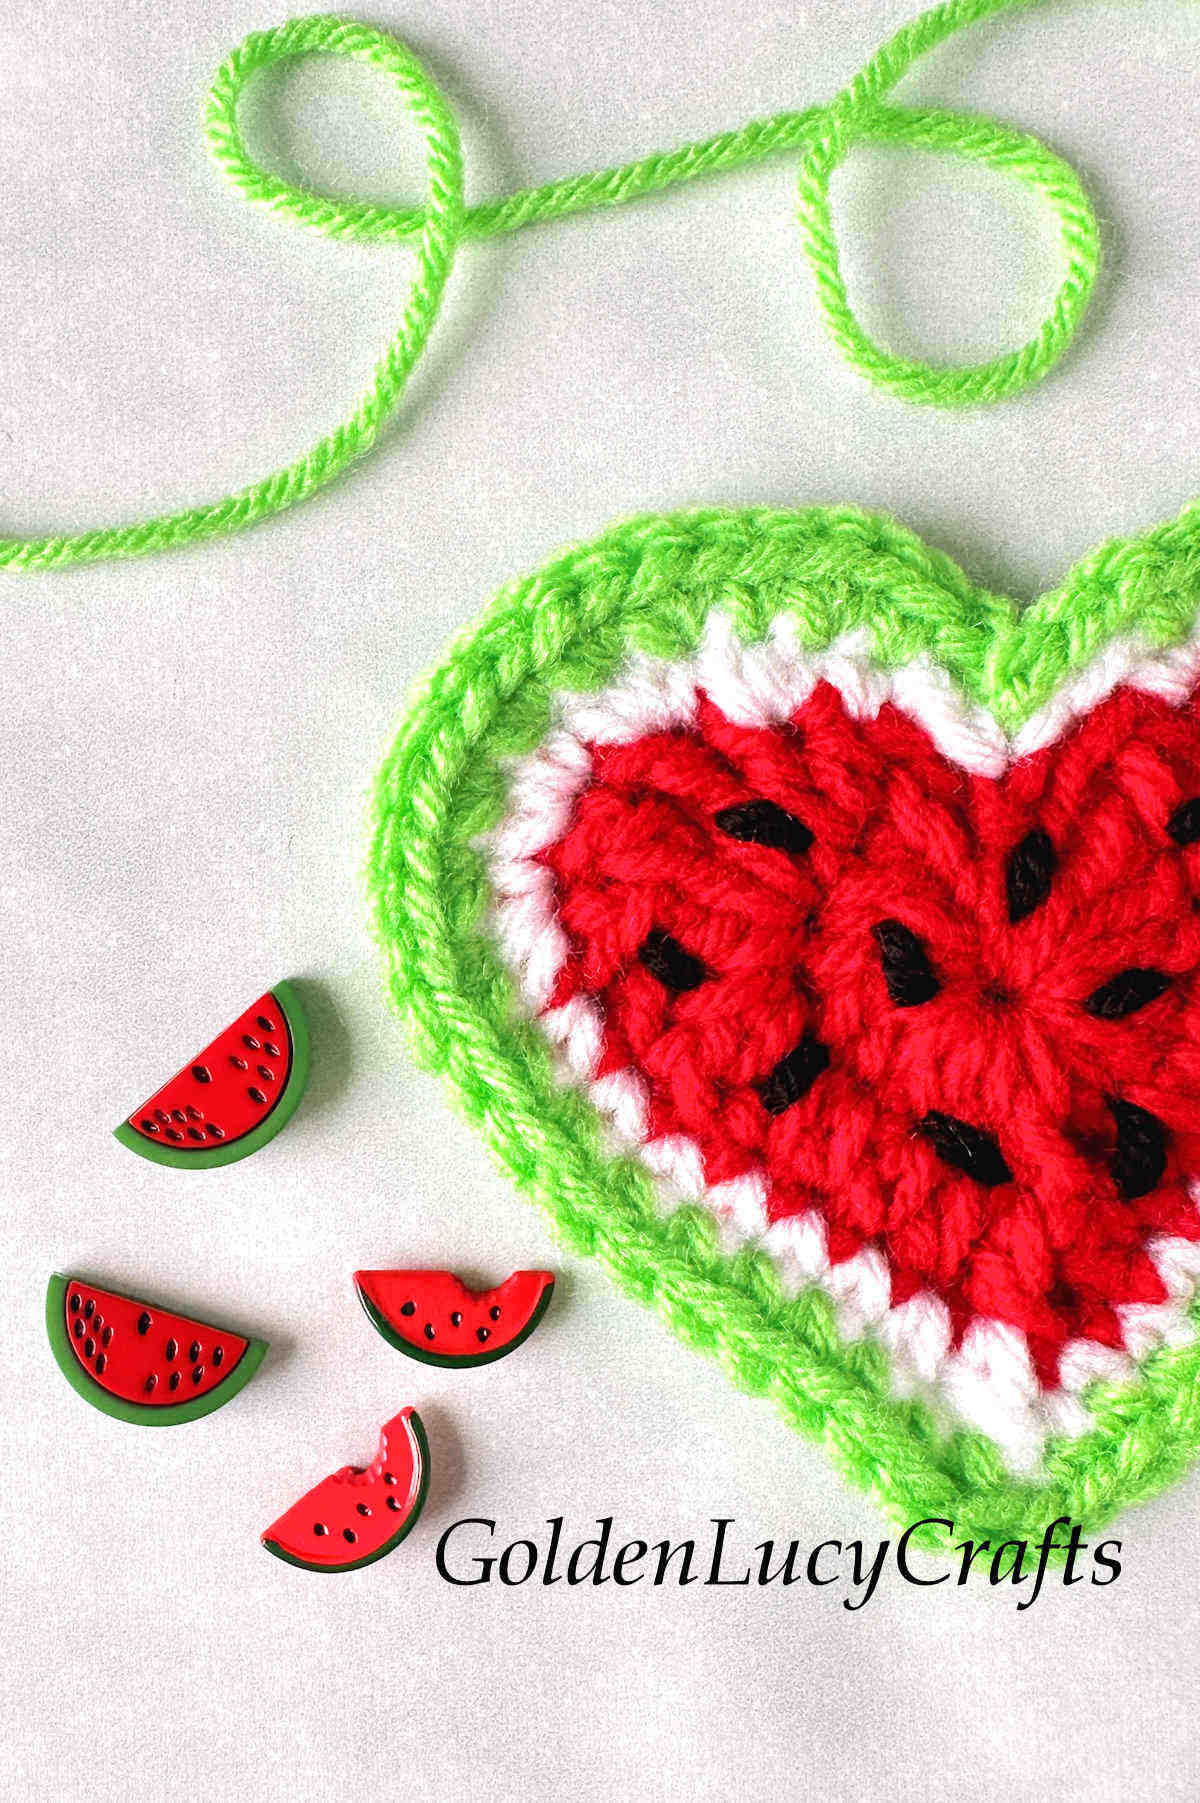 Crochet watermelon heart close up picture.